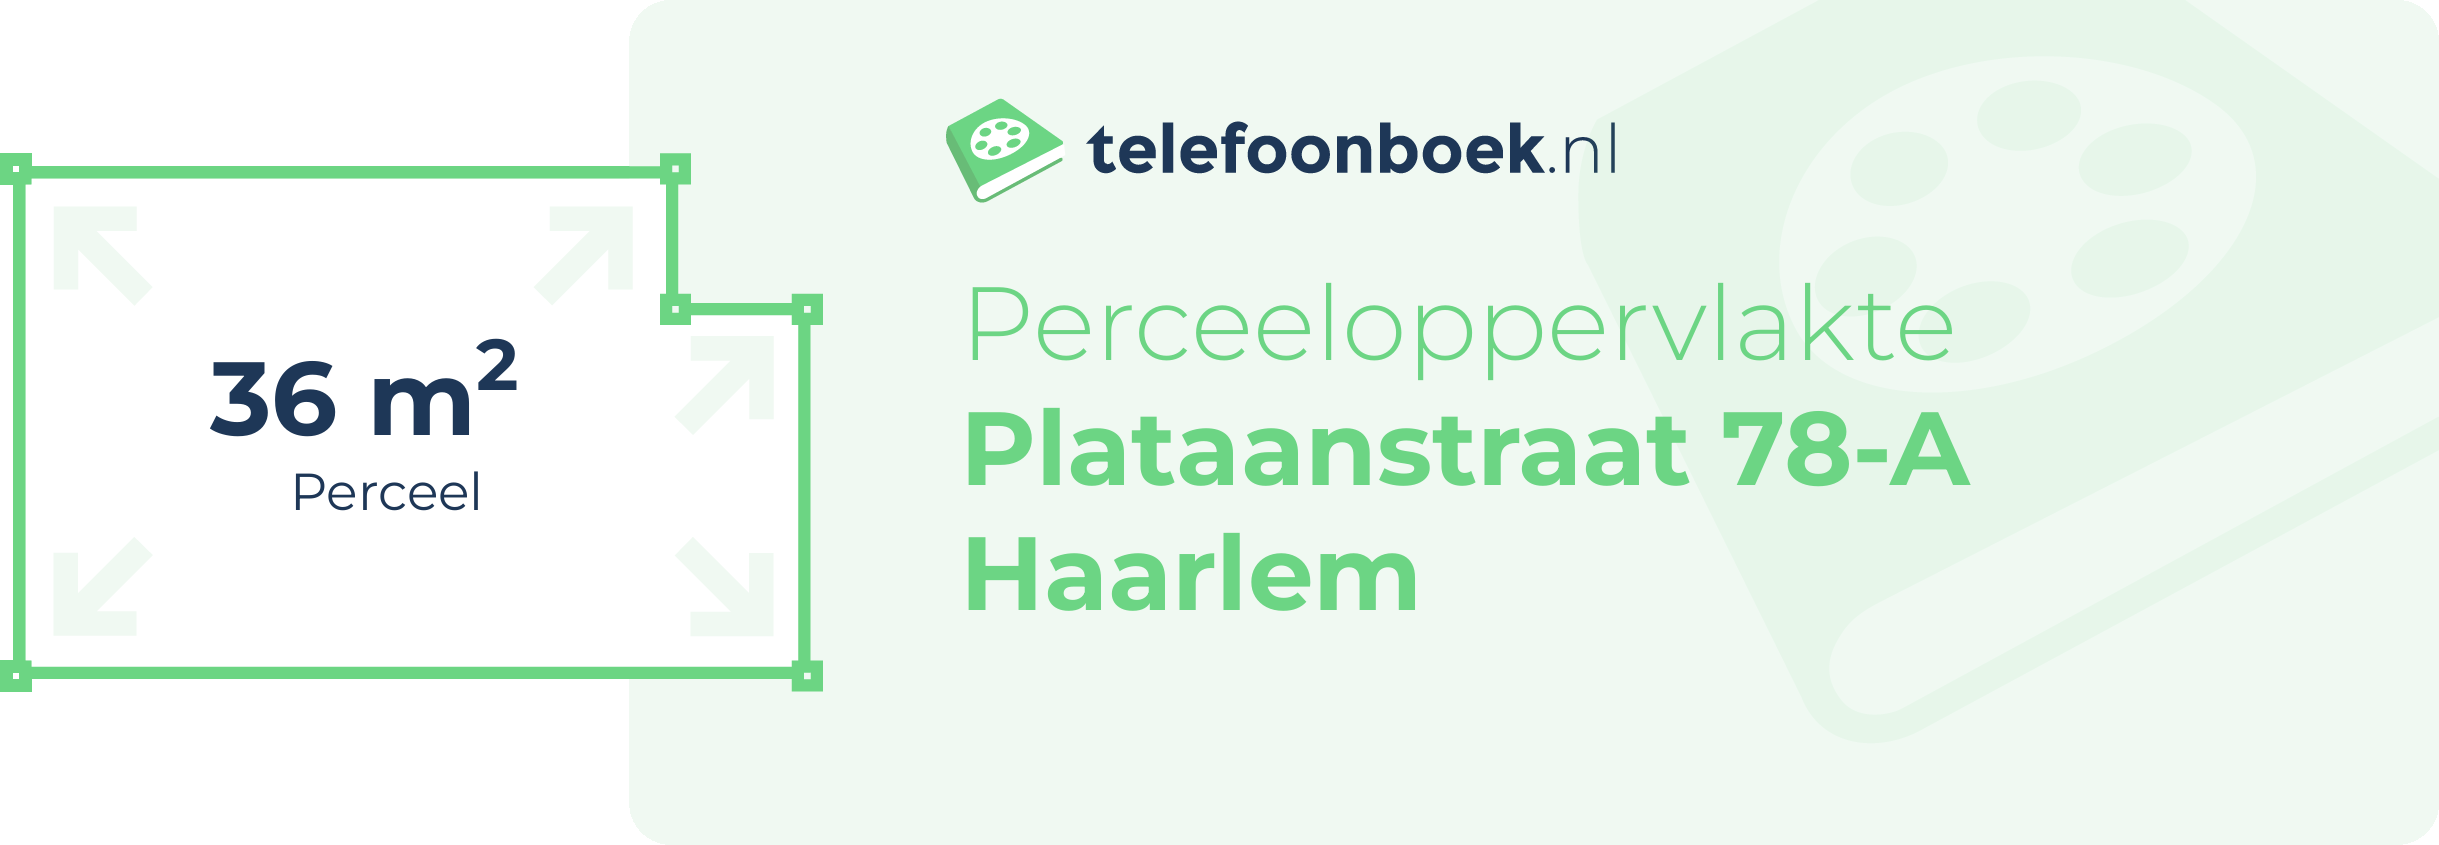 Perceeloppervlakte Plataanstraat 78-A Haarlem